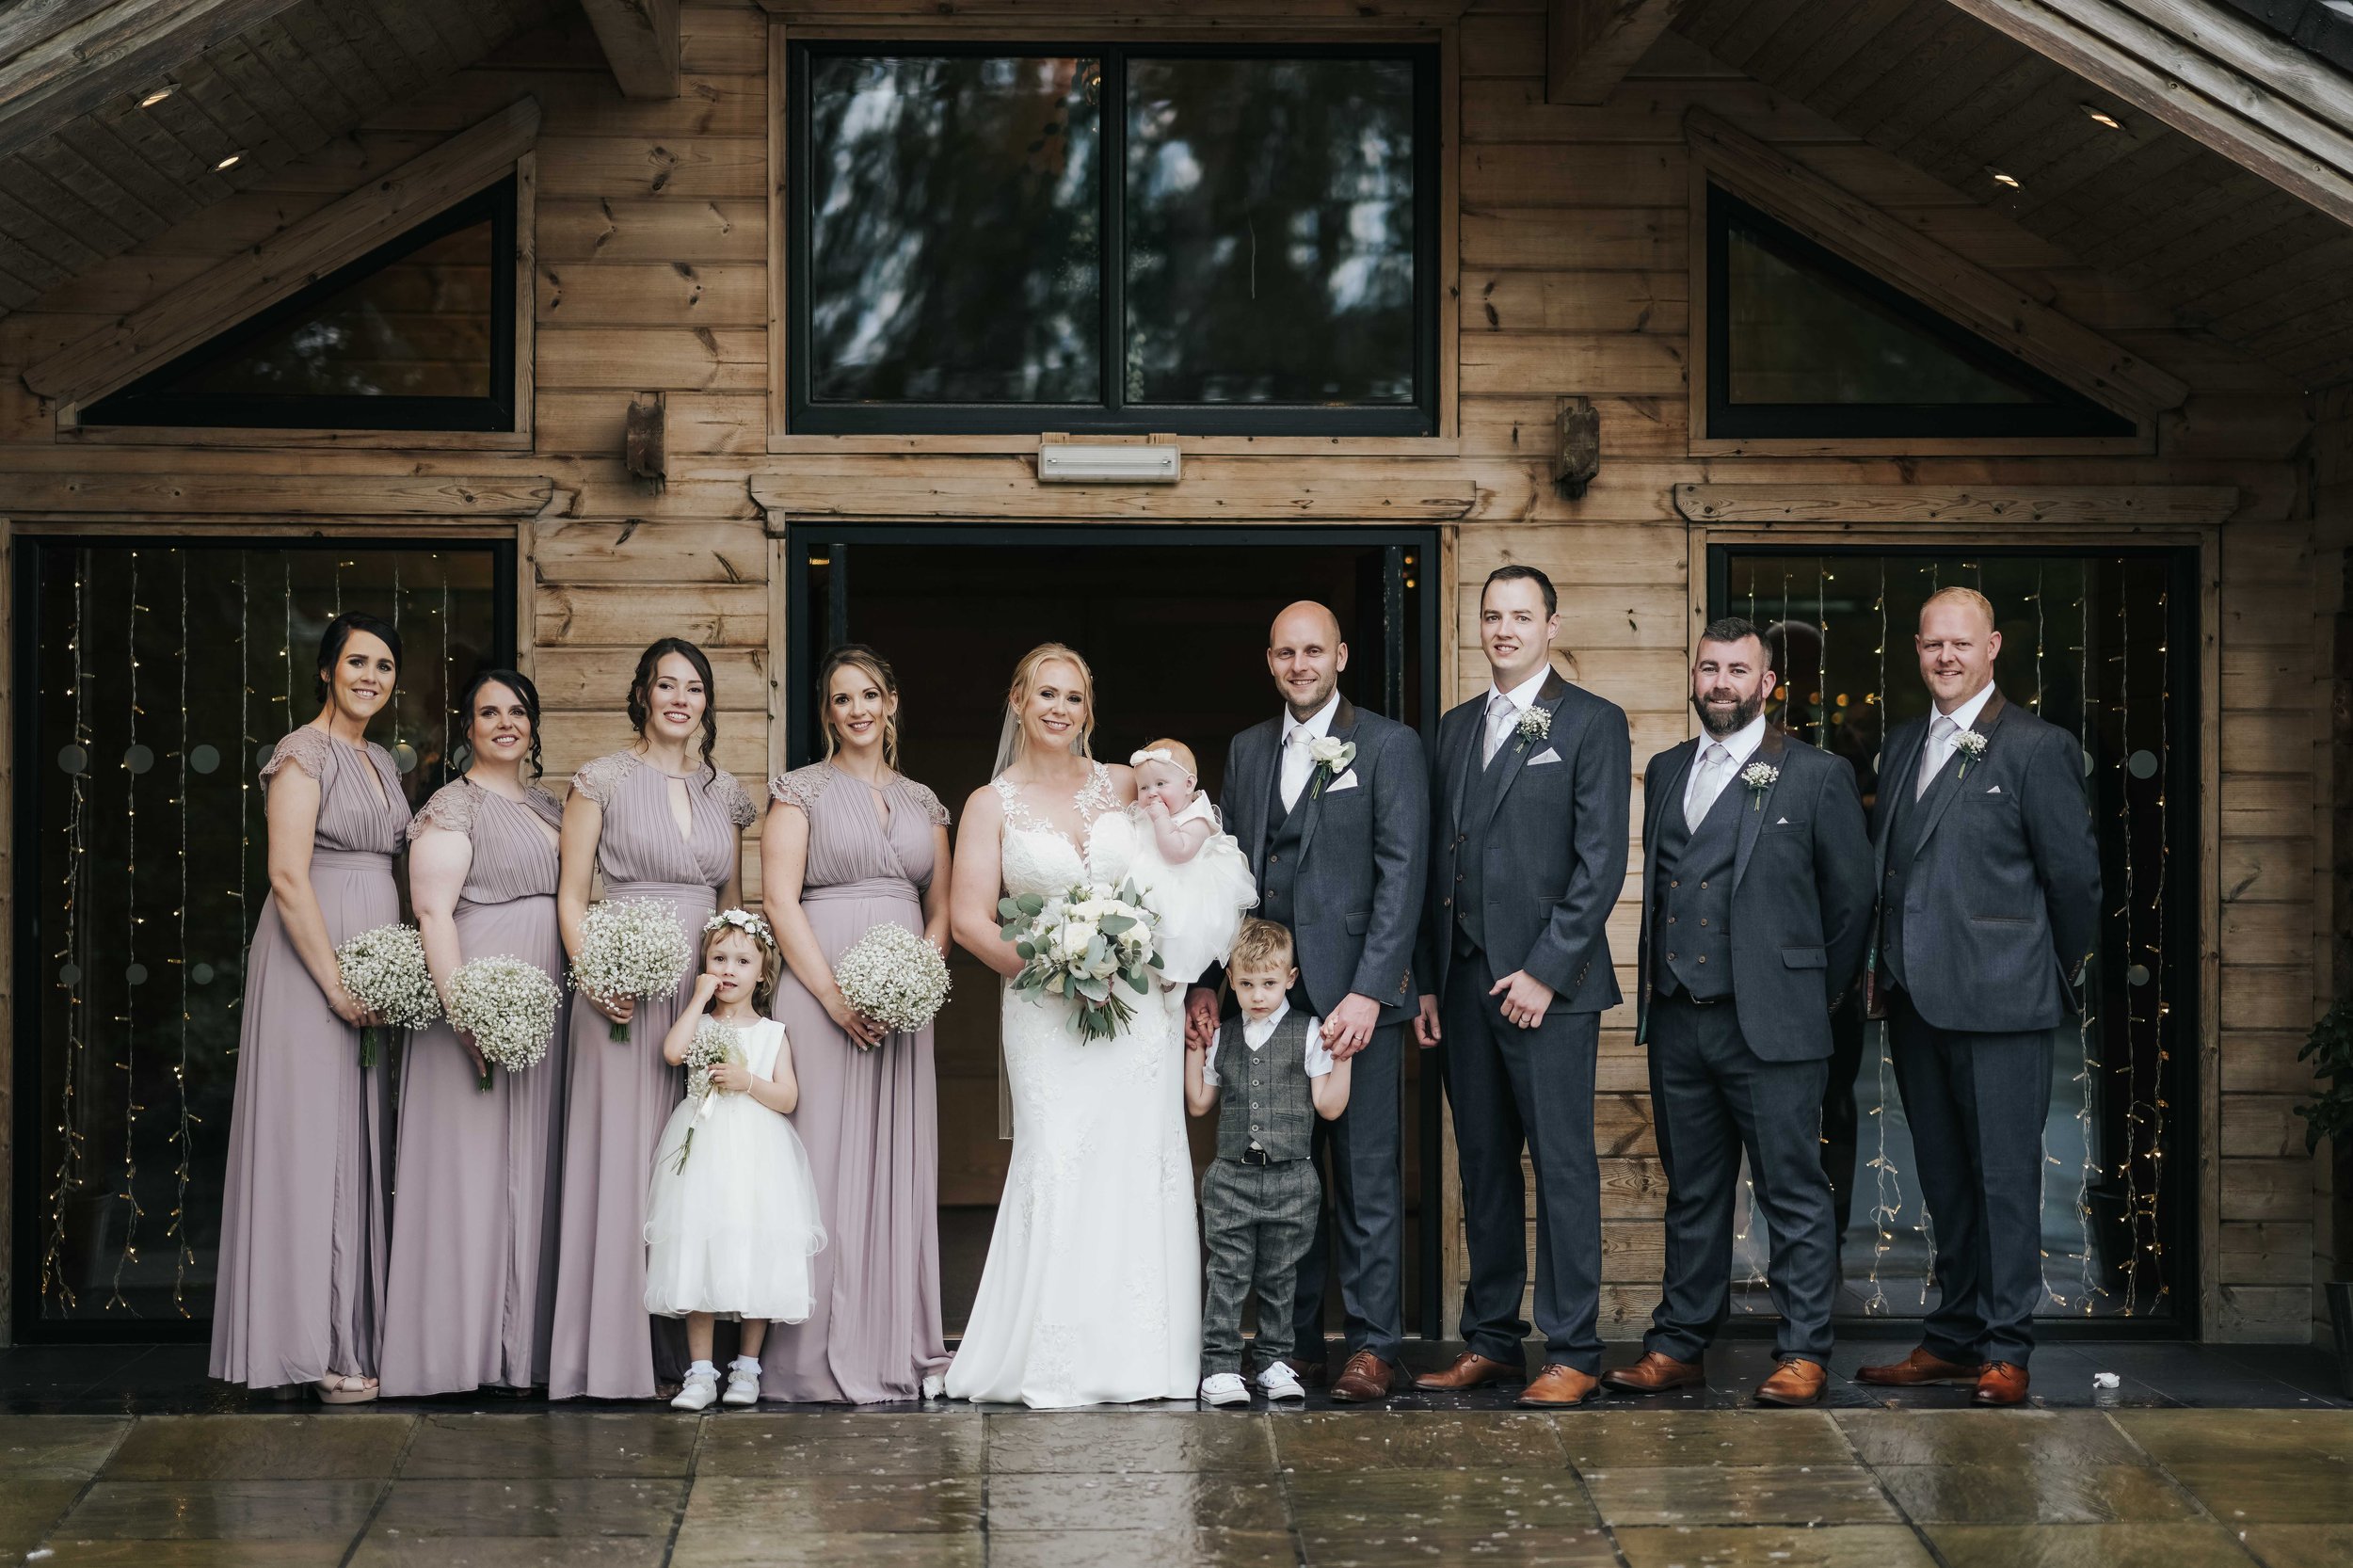 Styal Lodge wedding photography cheshire - 024.jpg